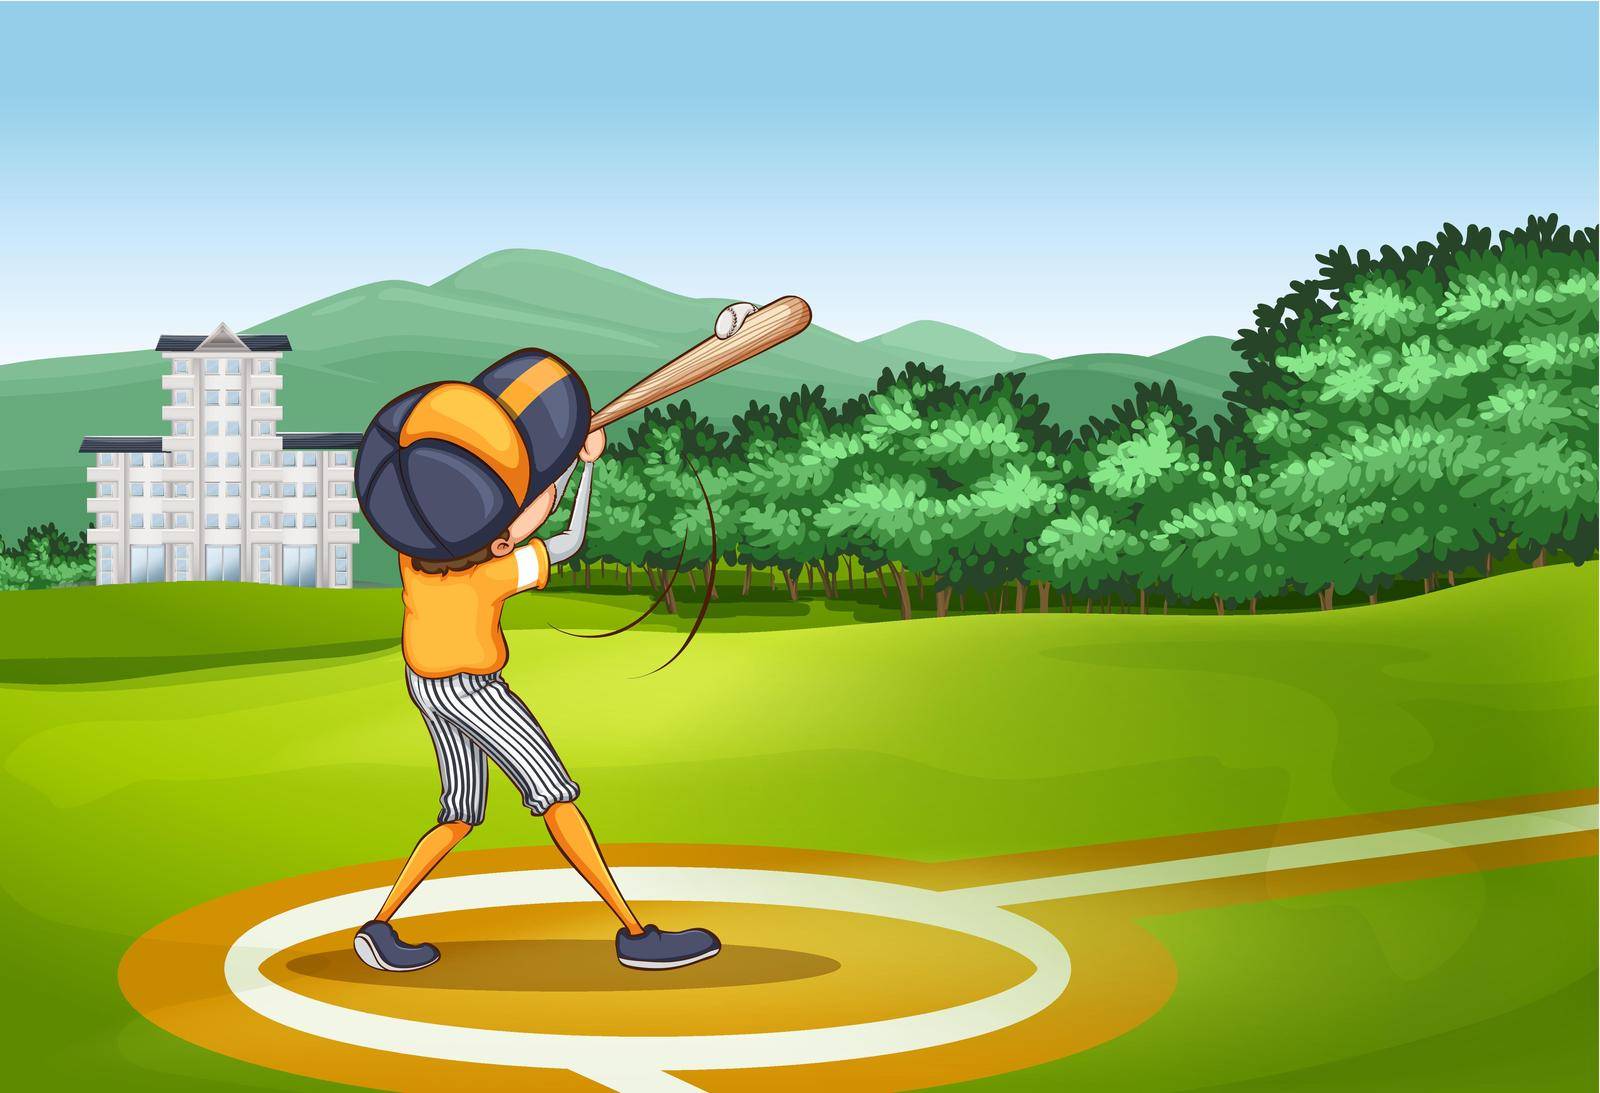 Boy hitting ball with baseball bat in the field